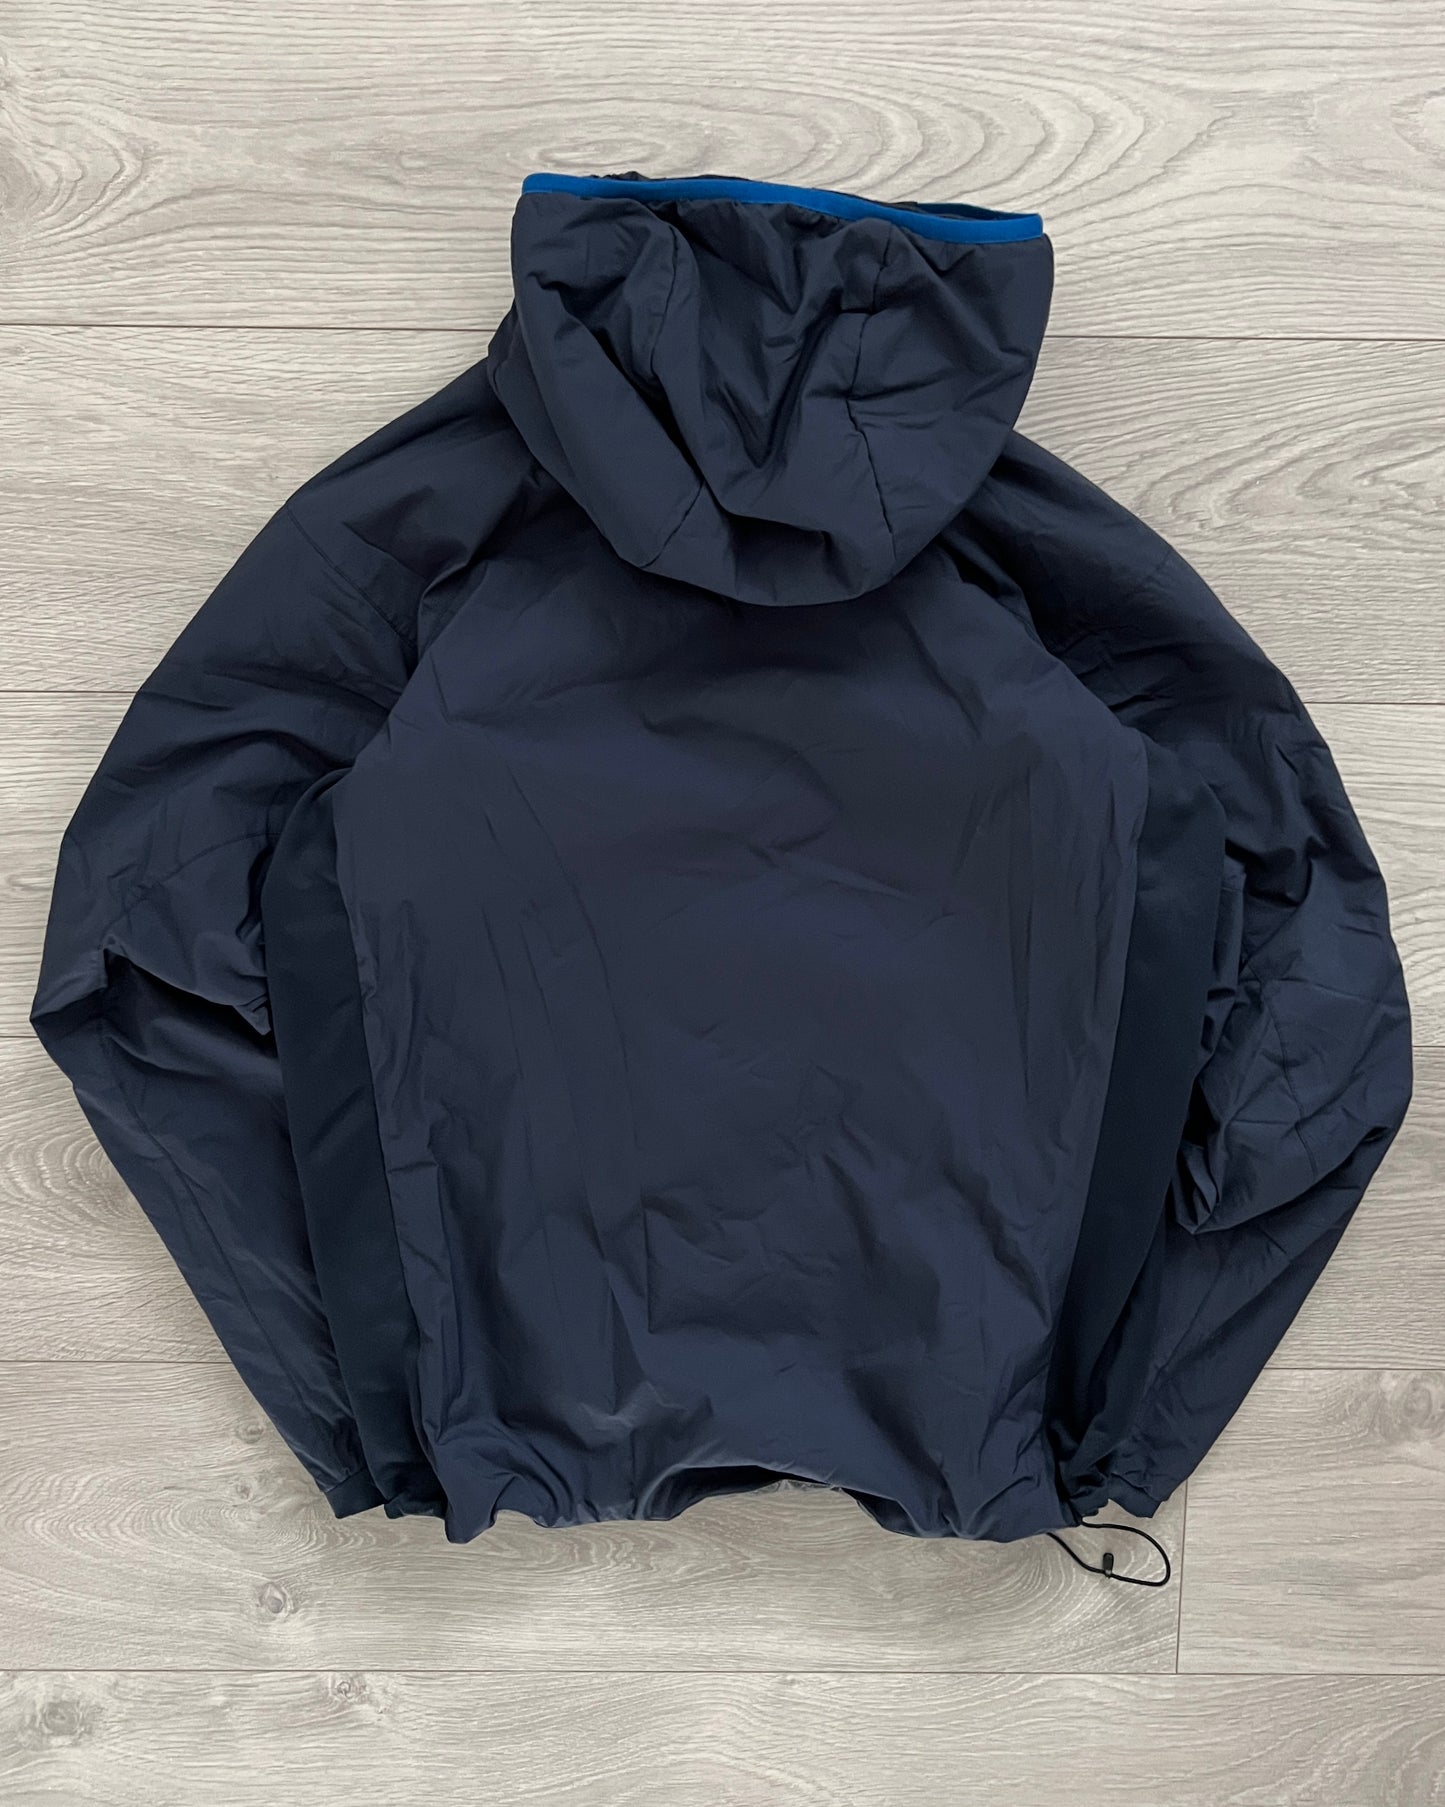 Arcteryx Atom LT Insulated Hooded Jacket - Size M